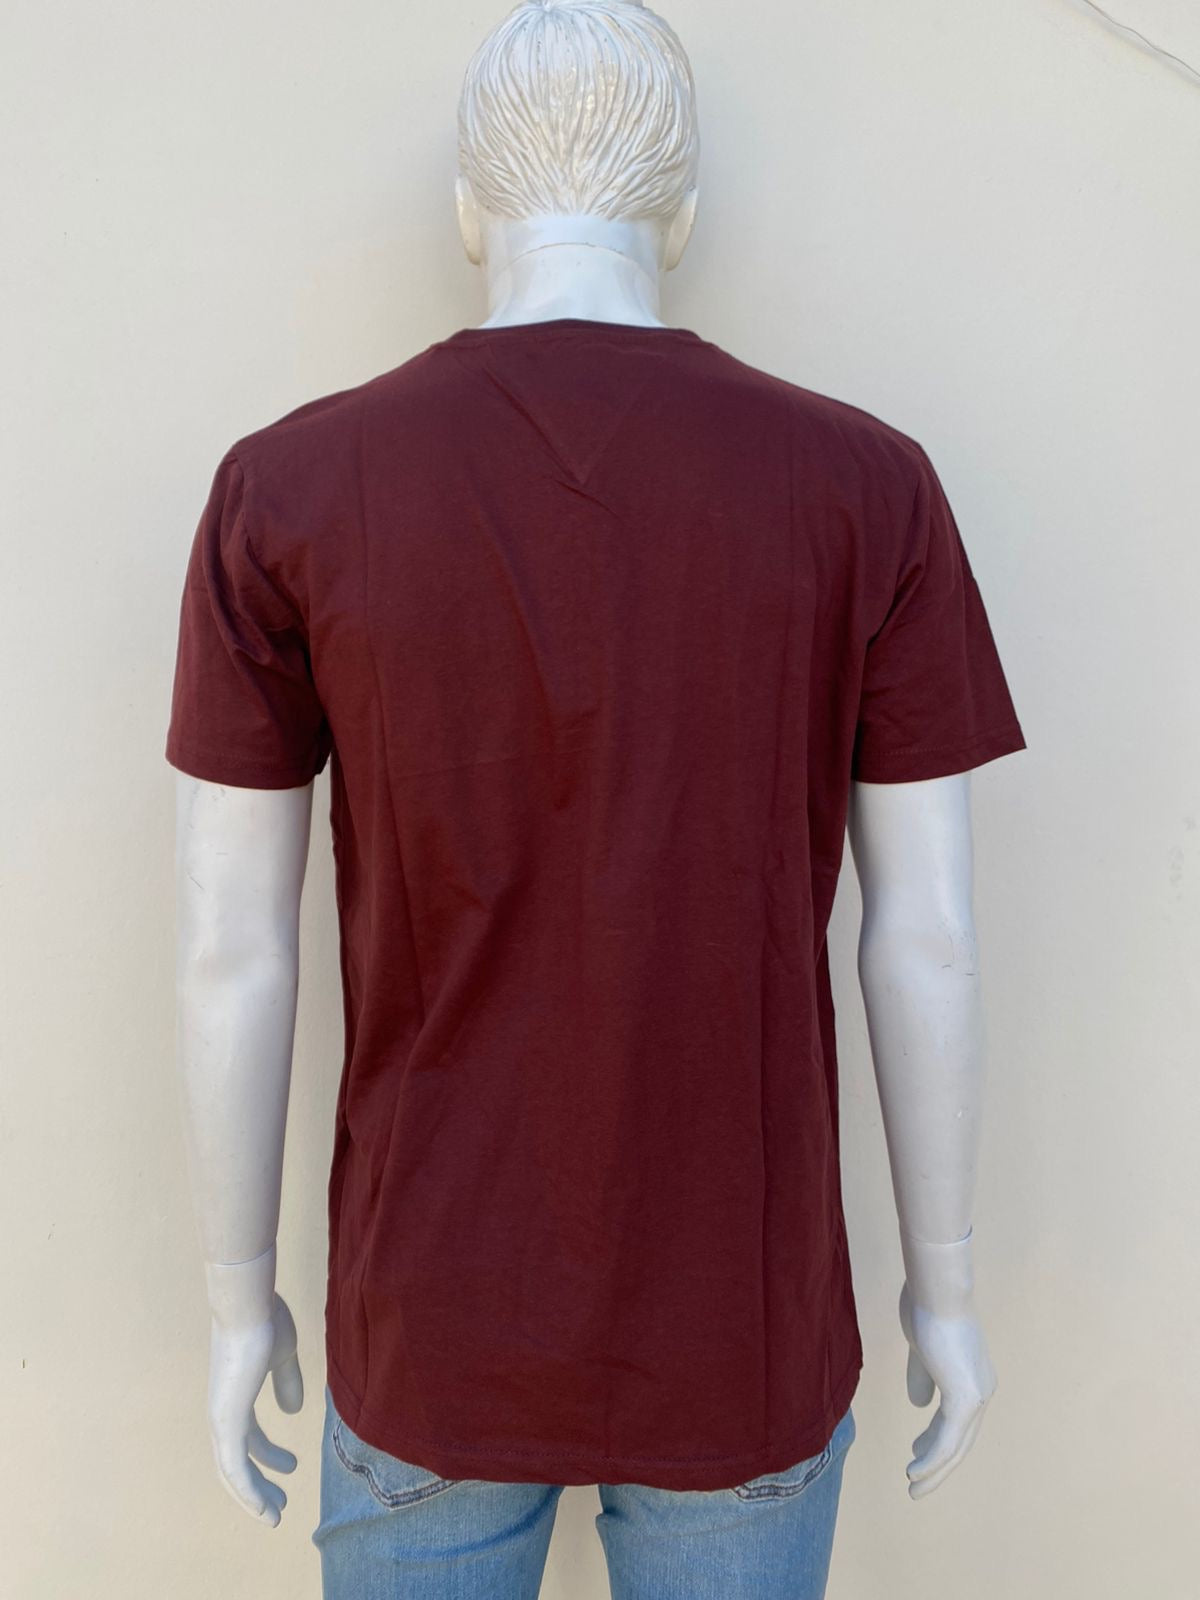 T-shirt Tommy Hilfiger rojo vino opaco Original con logotipo Tommy Jeans